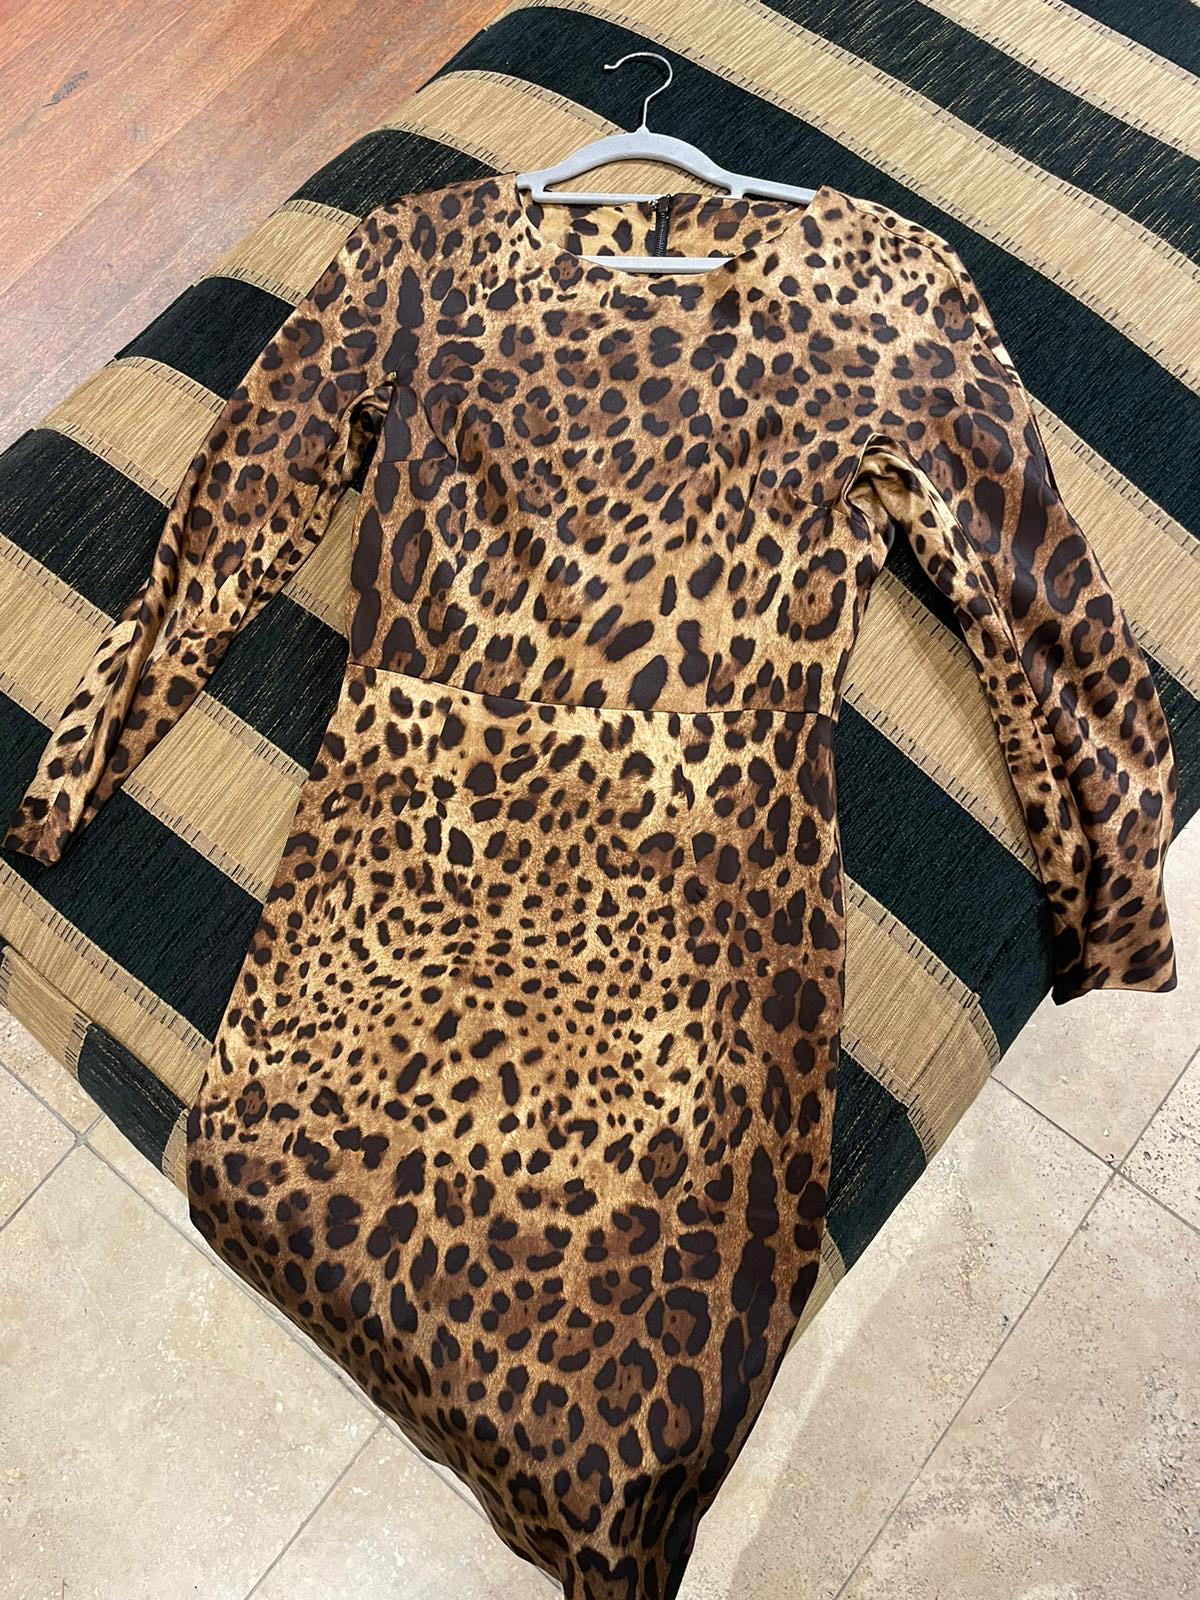 Dolce & Gabbana leopard print dress size 42